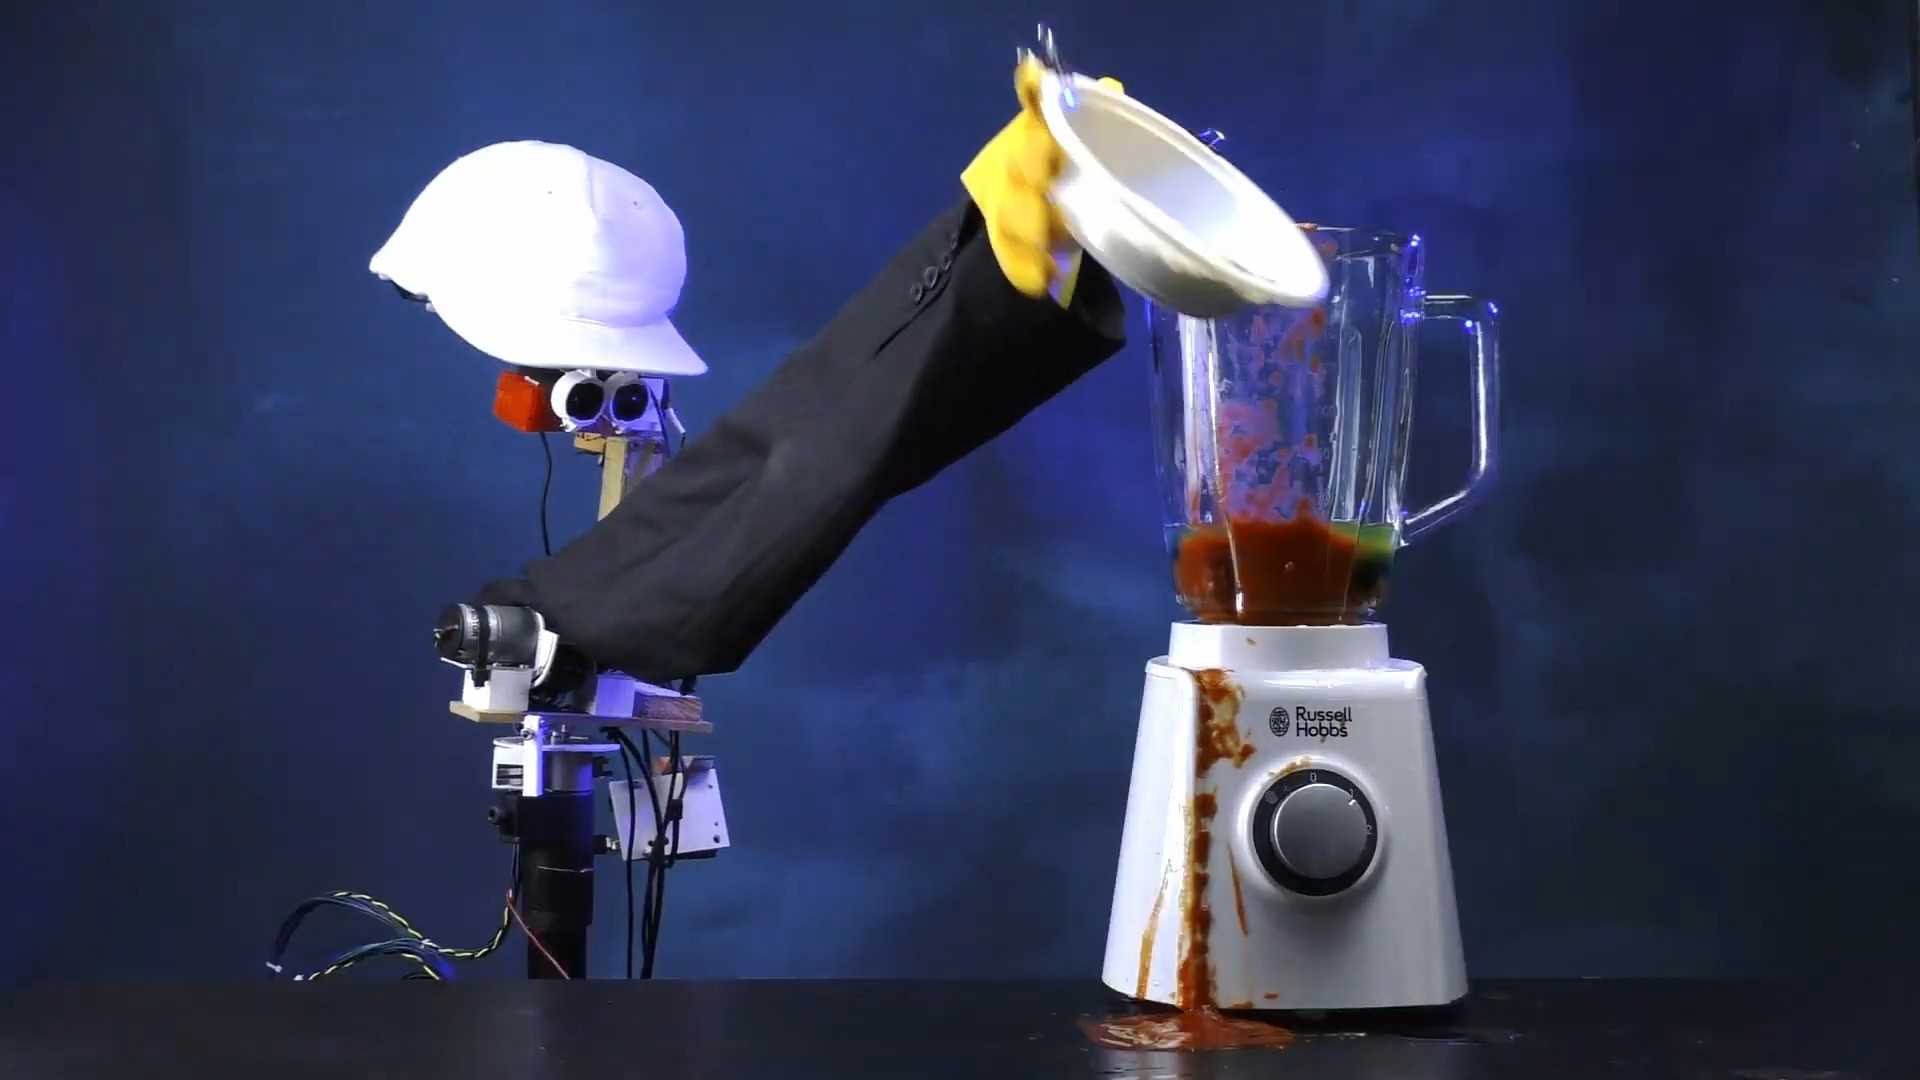 A naff robot attempting to blend a cocktail